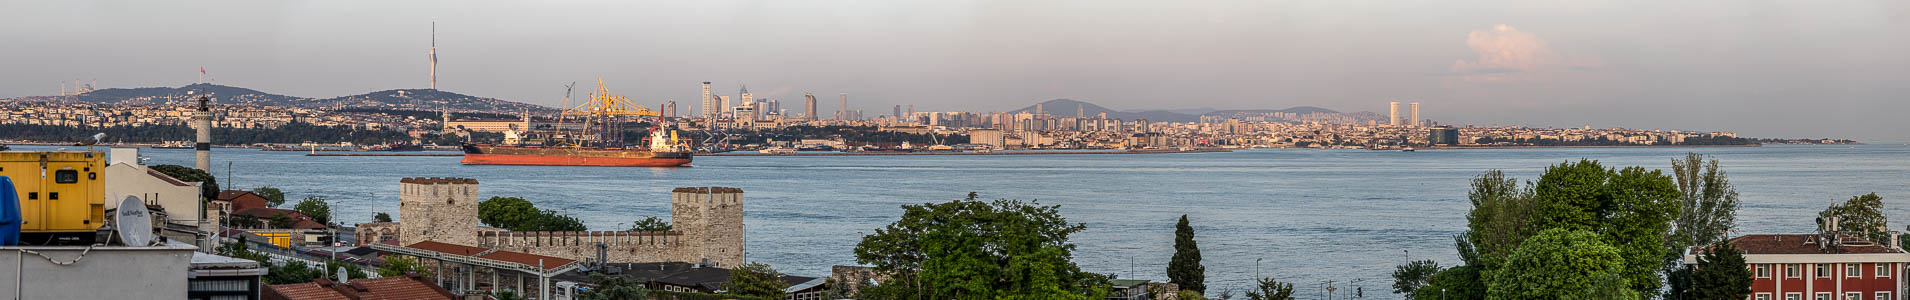 Istanbul Blick vom Saba Sultan Hotel: Bosporus / Marmarameer, Üsküdar / Kadıköy